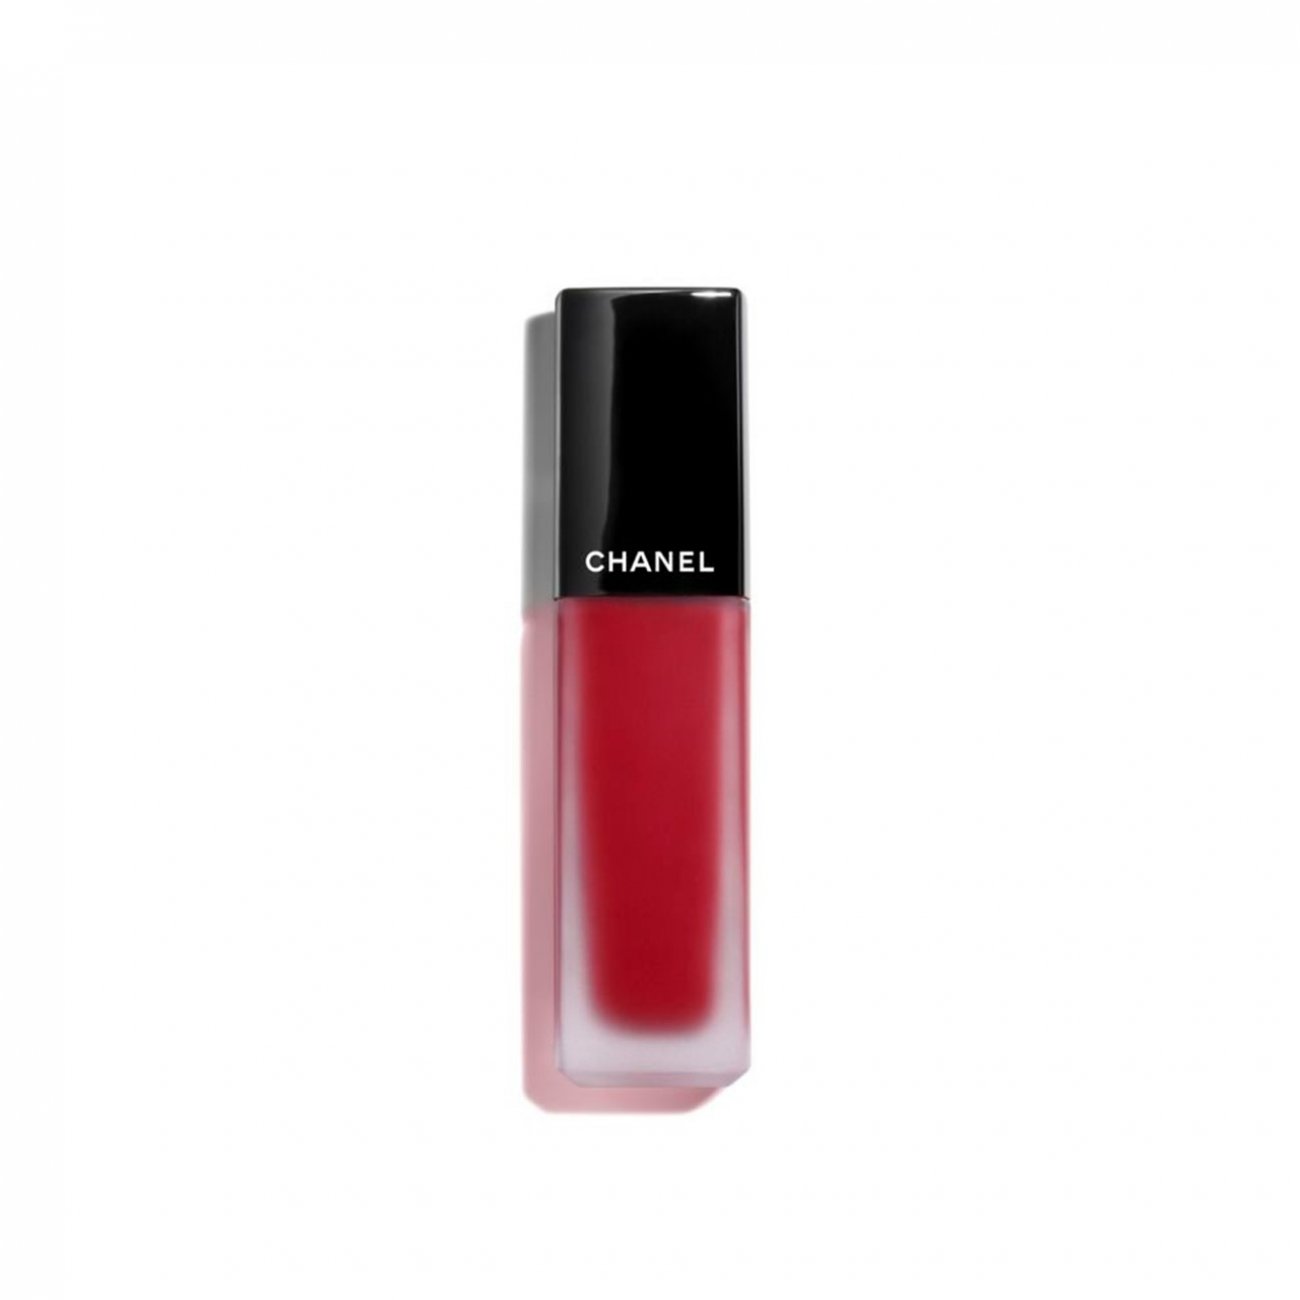 Chanel Rouge Allure Ink Matte Liquid Lip Colour - # 152 Choquant 165152 